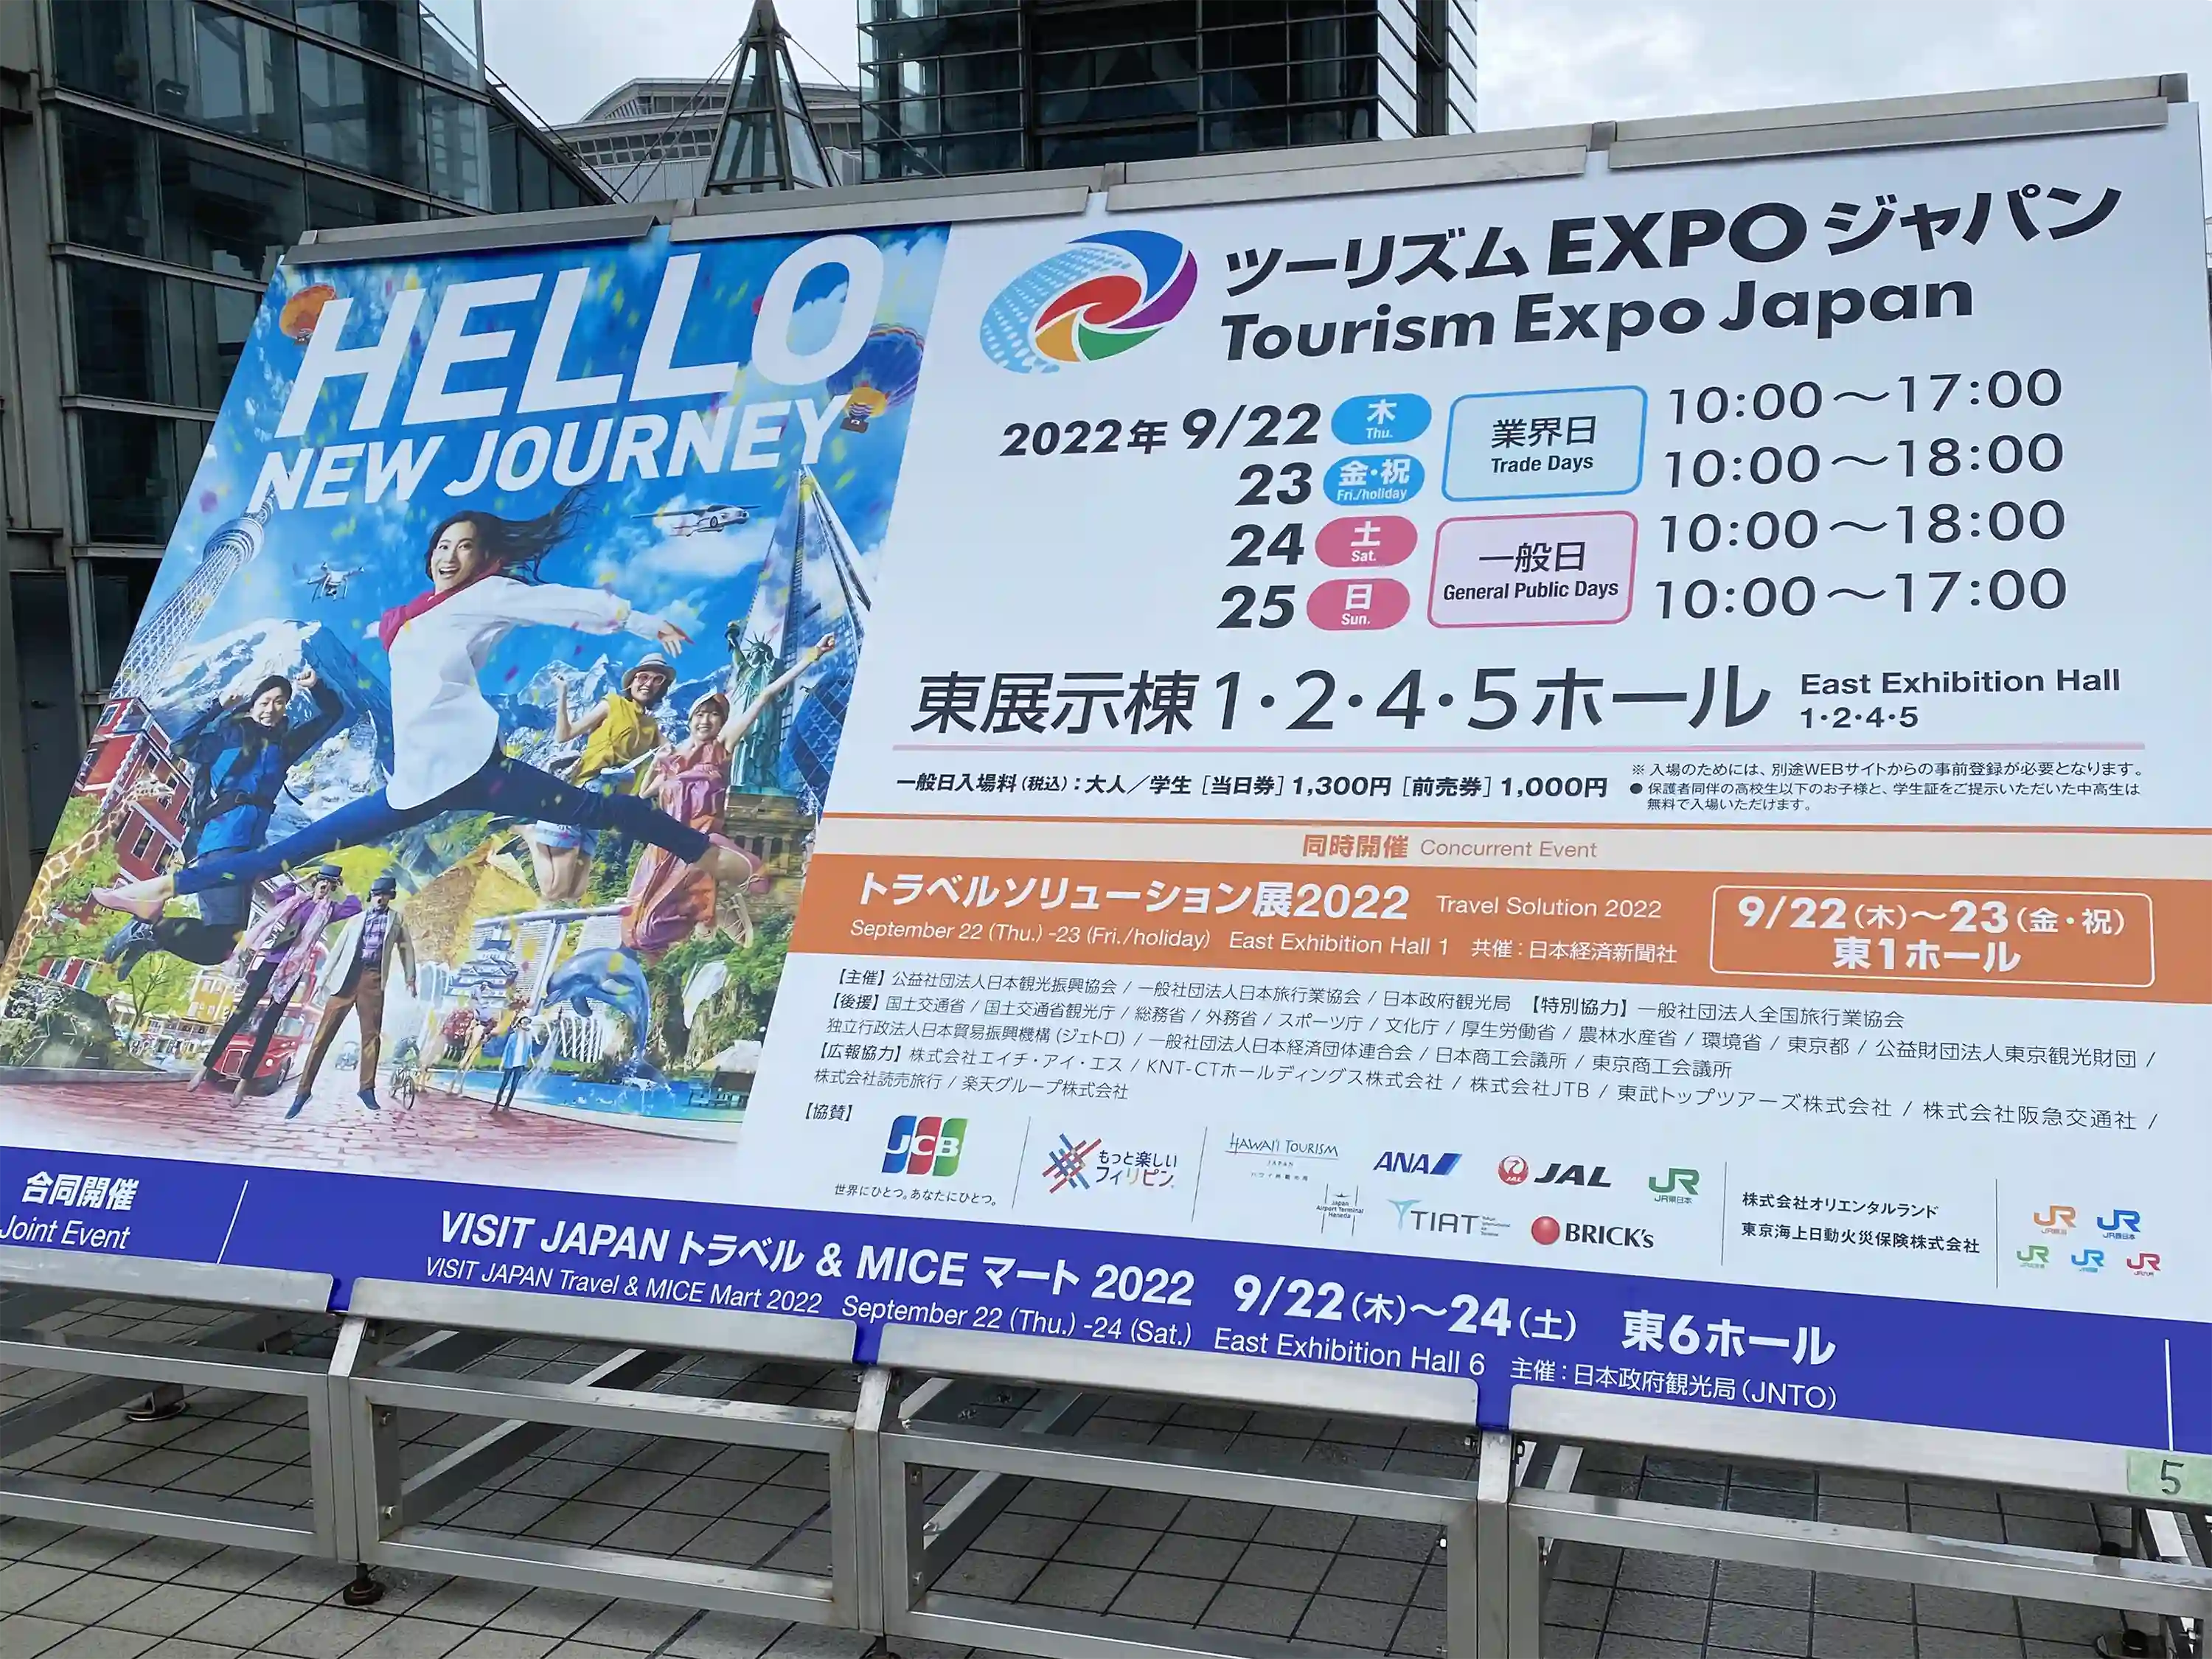 Tourism Expo Japan 2022 advertising billboard outside Tokyo Big Sight.